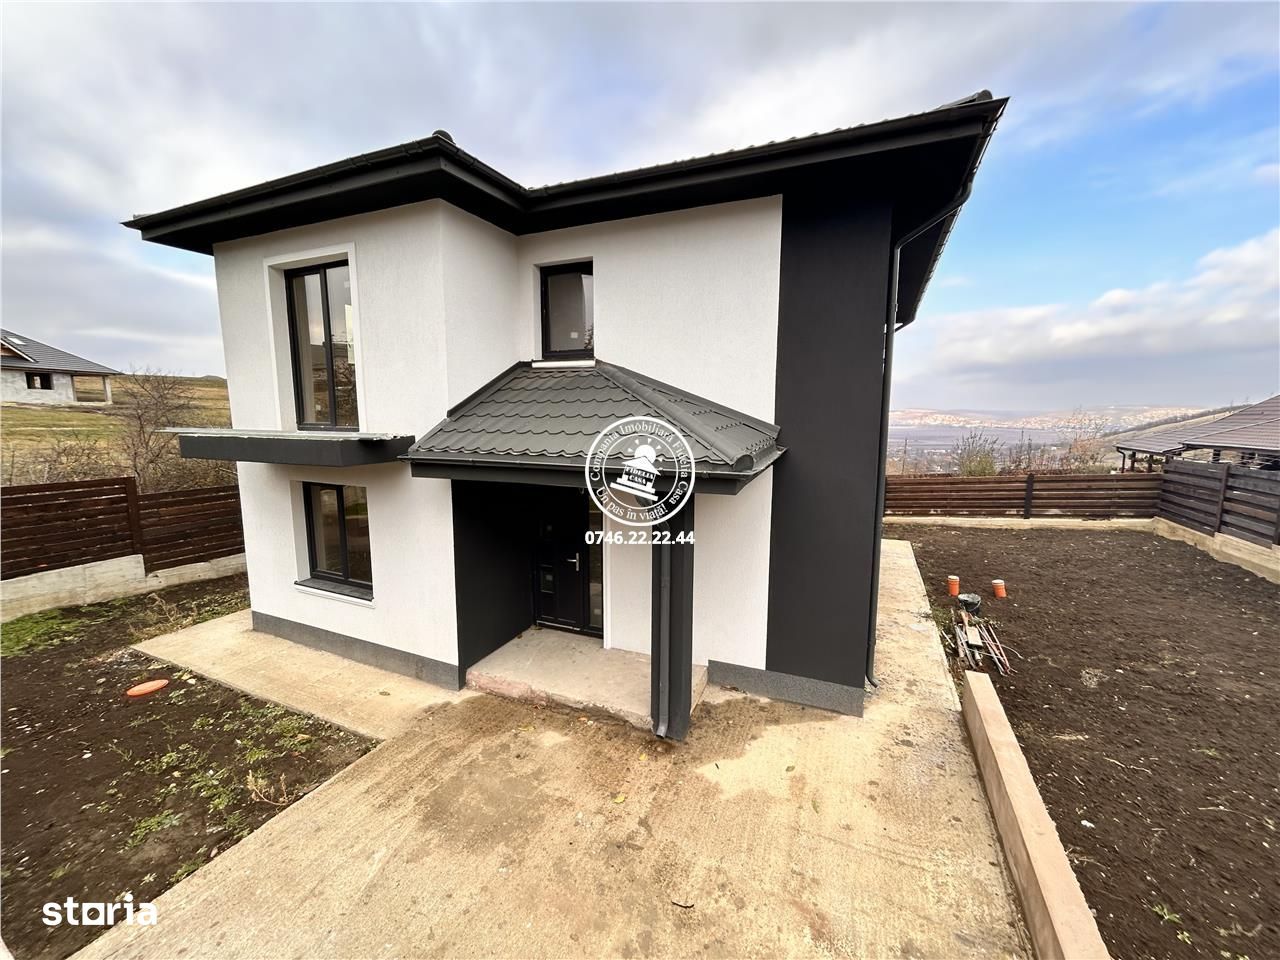 Vila cu 4 camere si 2 bai de vanzare situat in Miroslava, 806,45€/m²